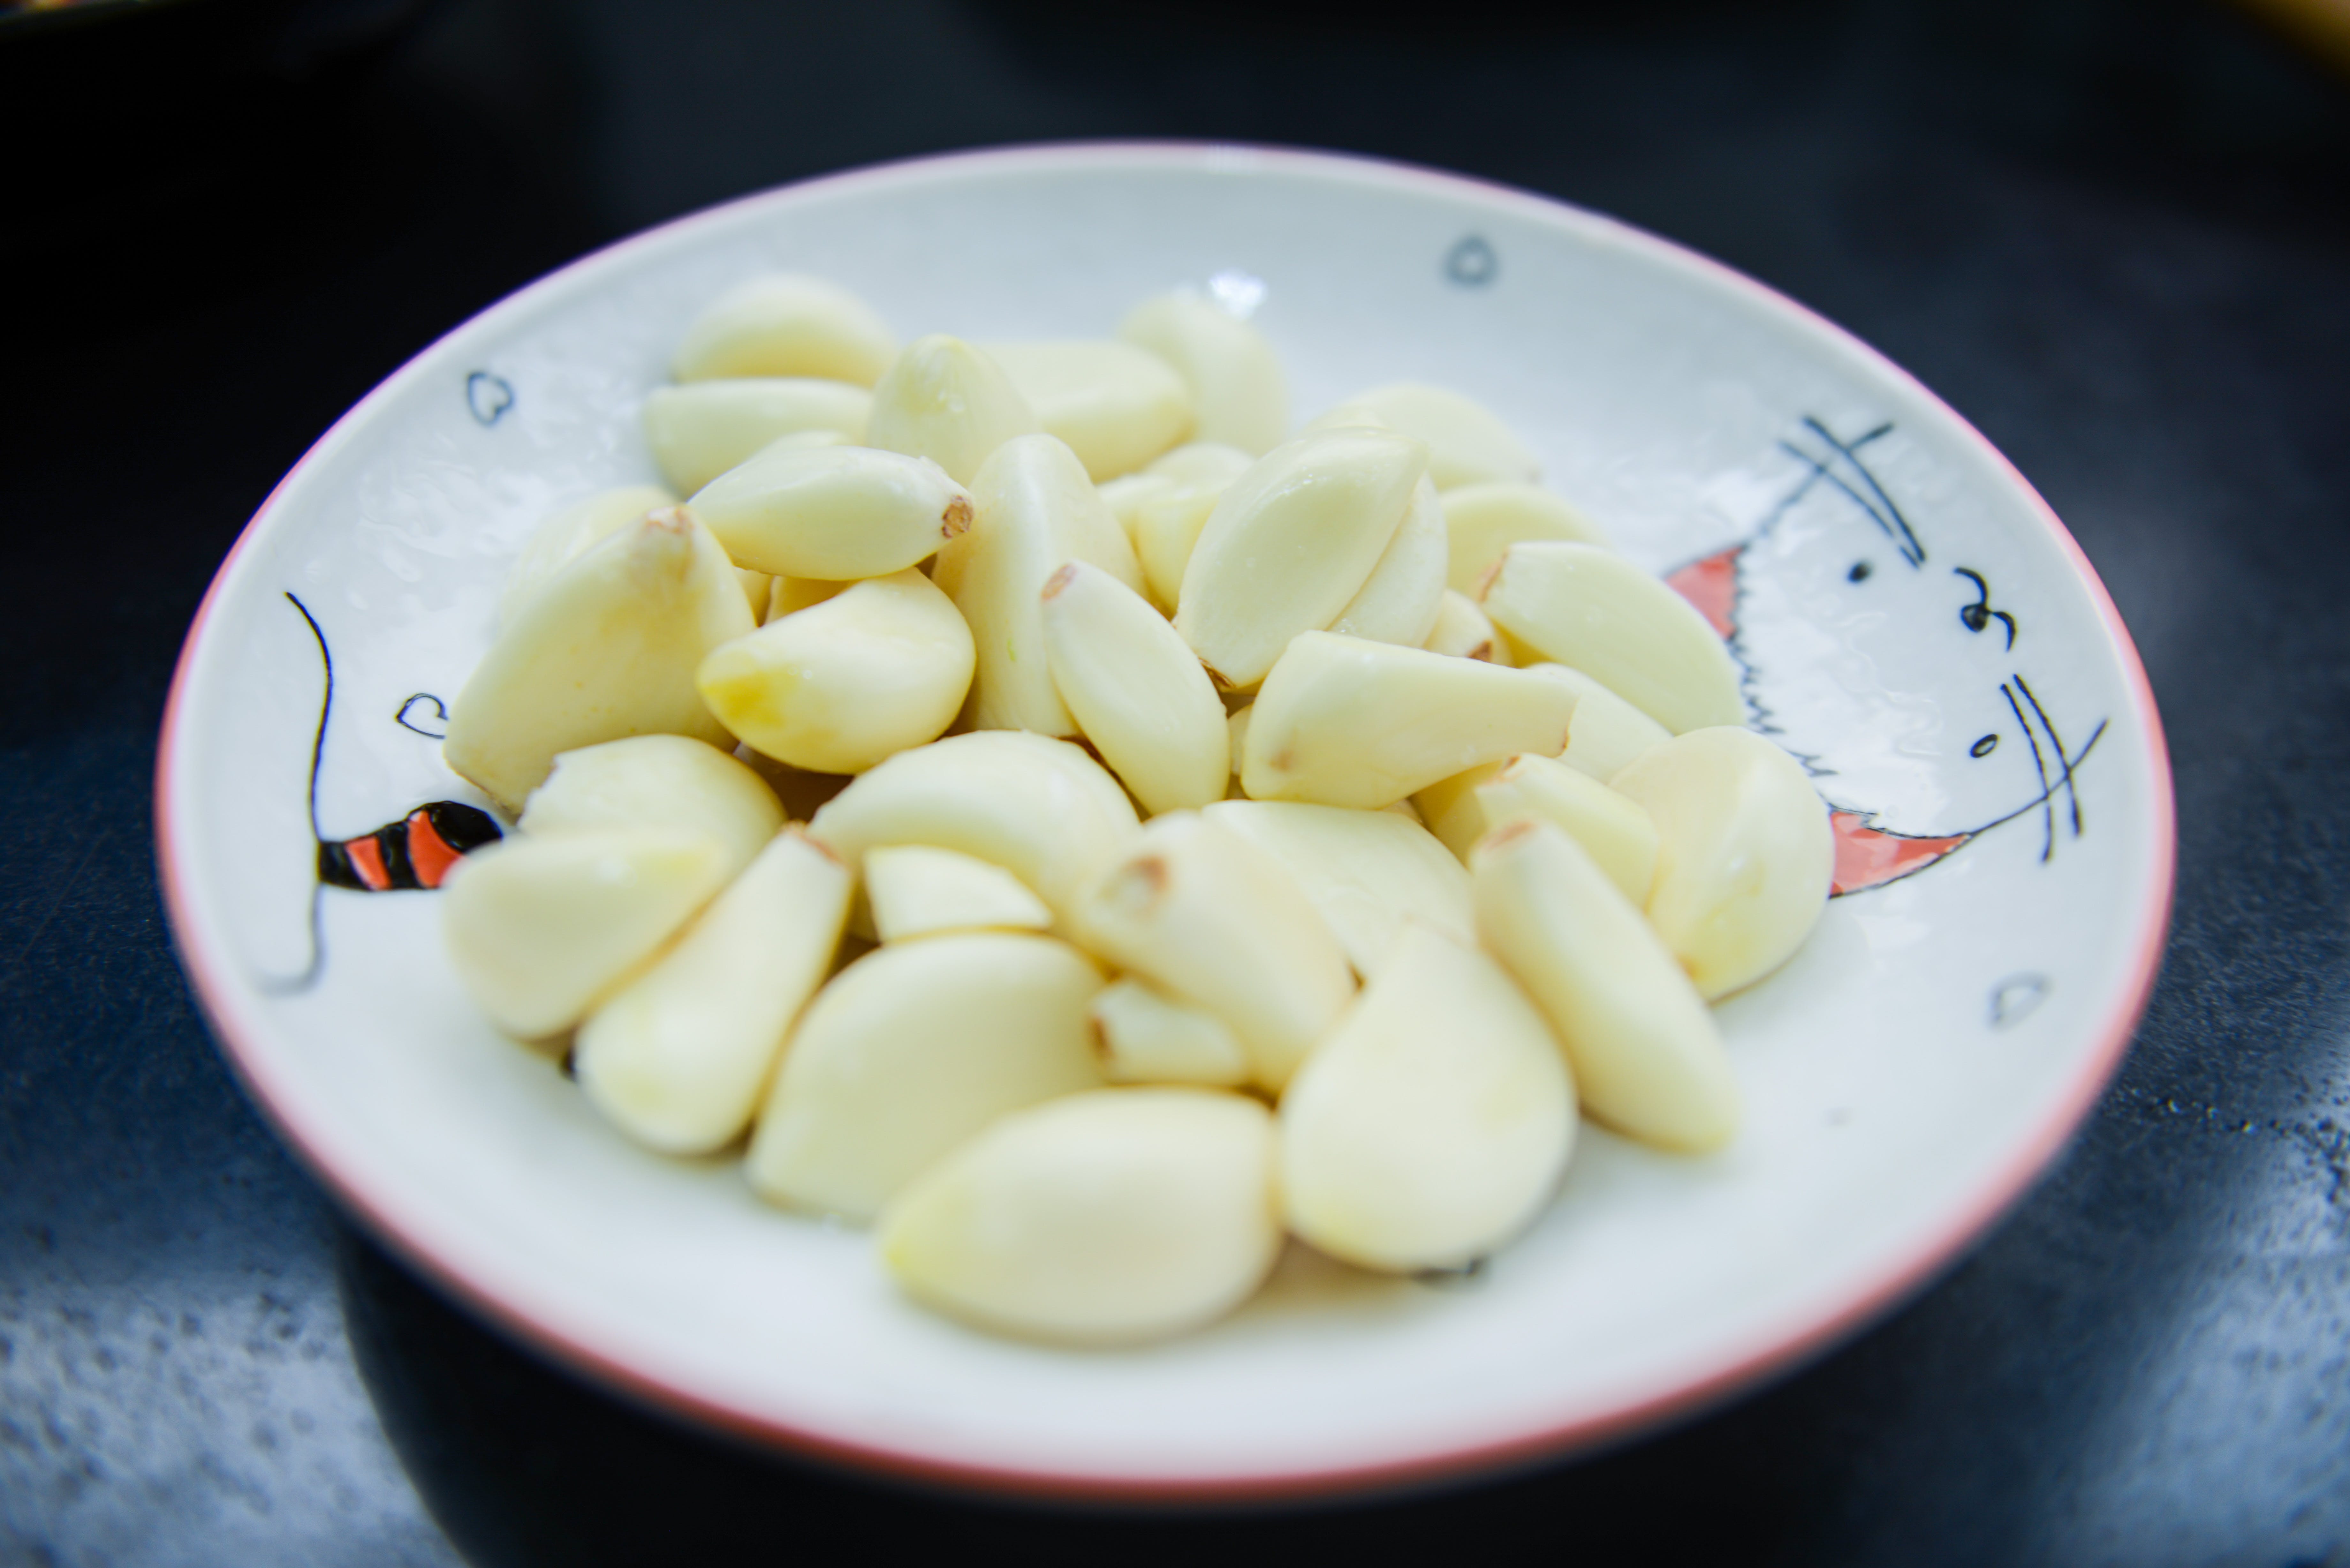 peeled garlic on a plate